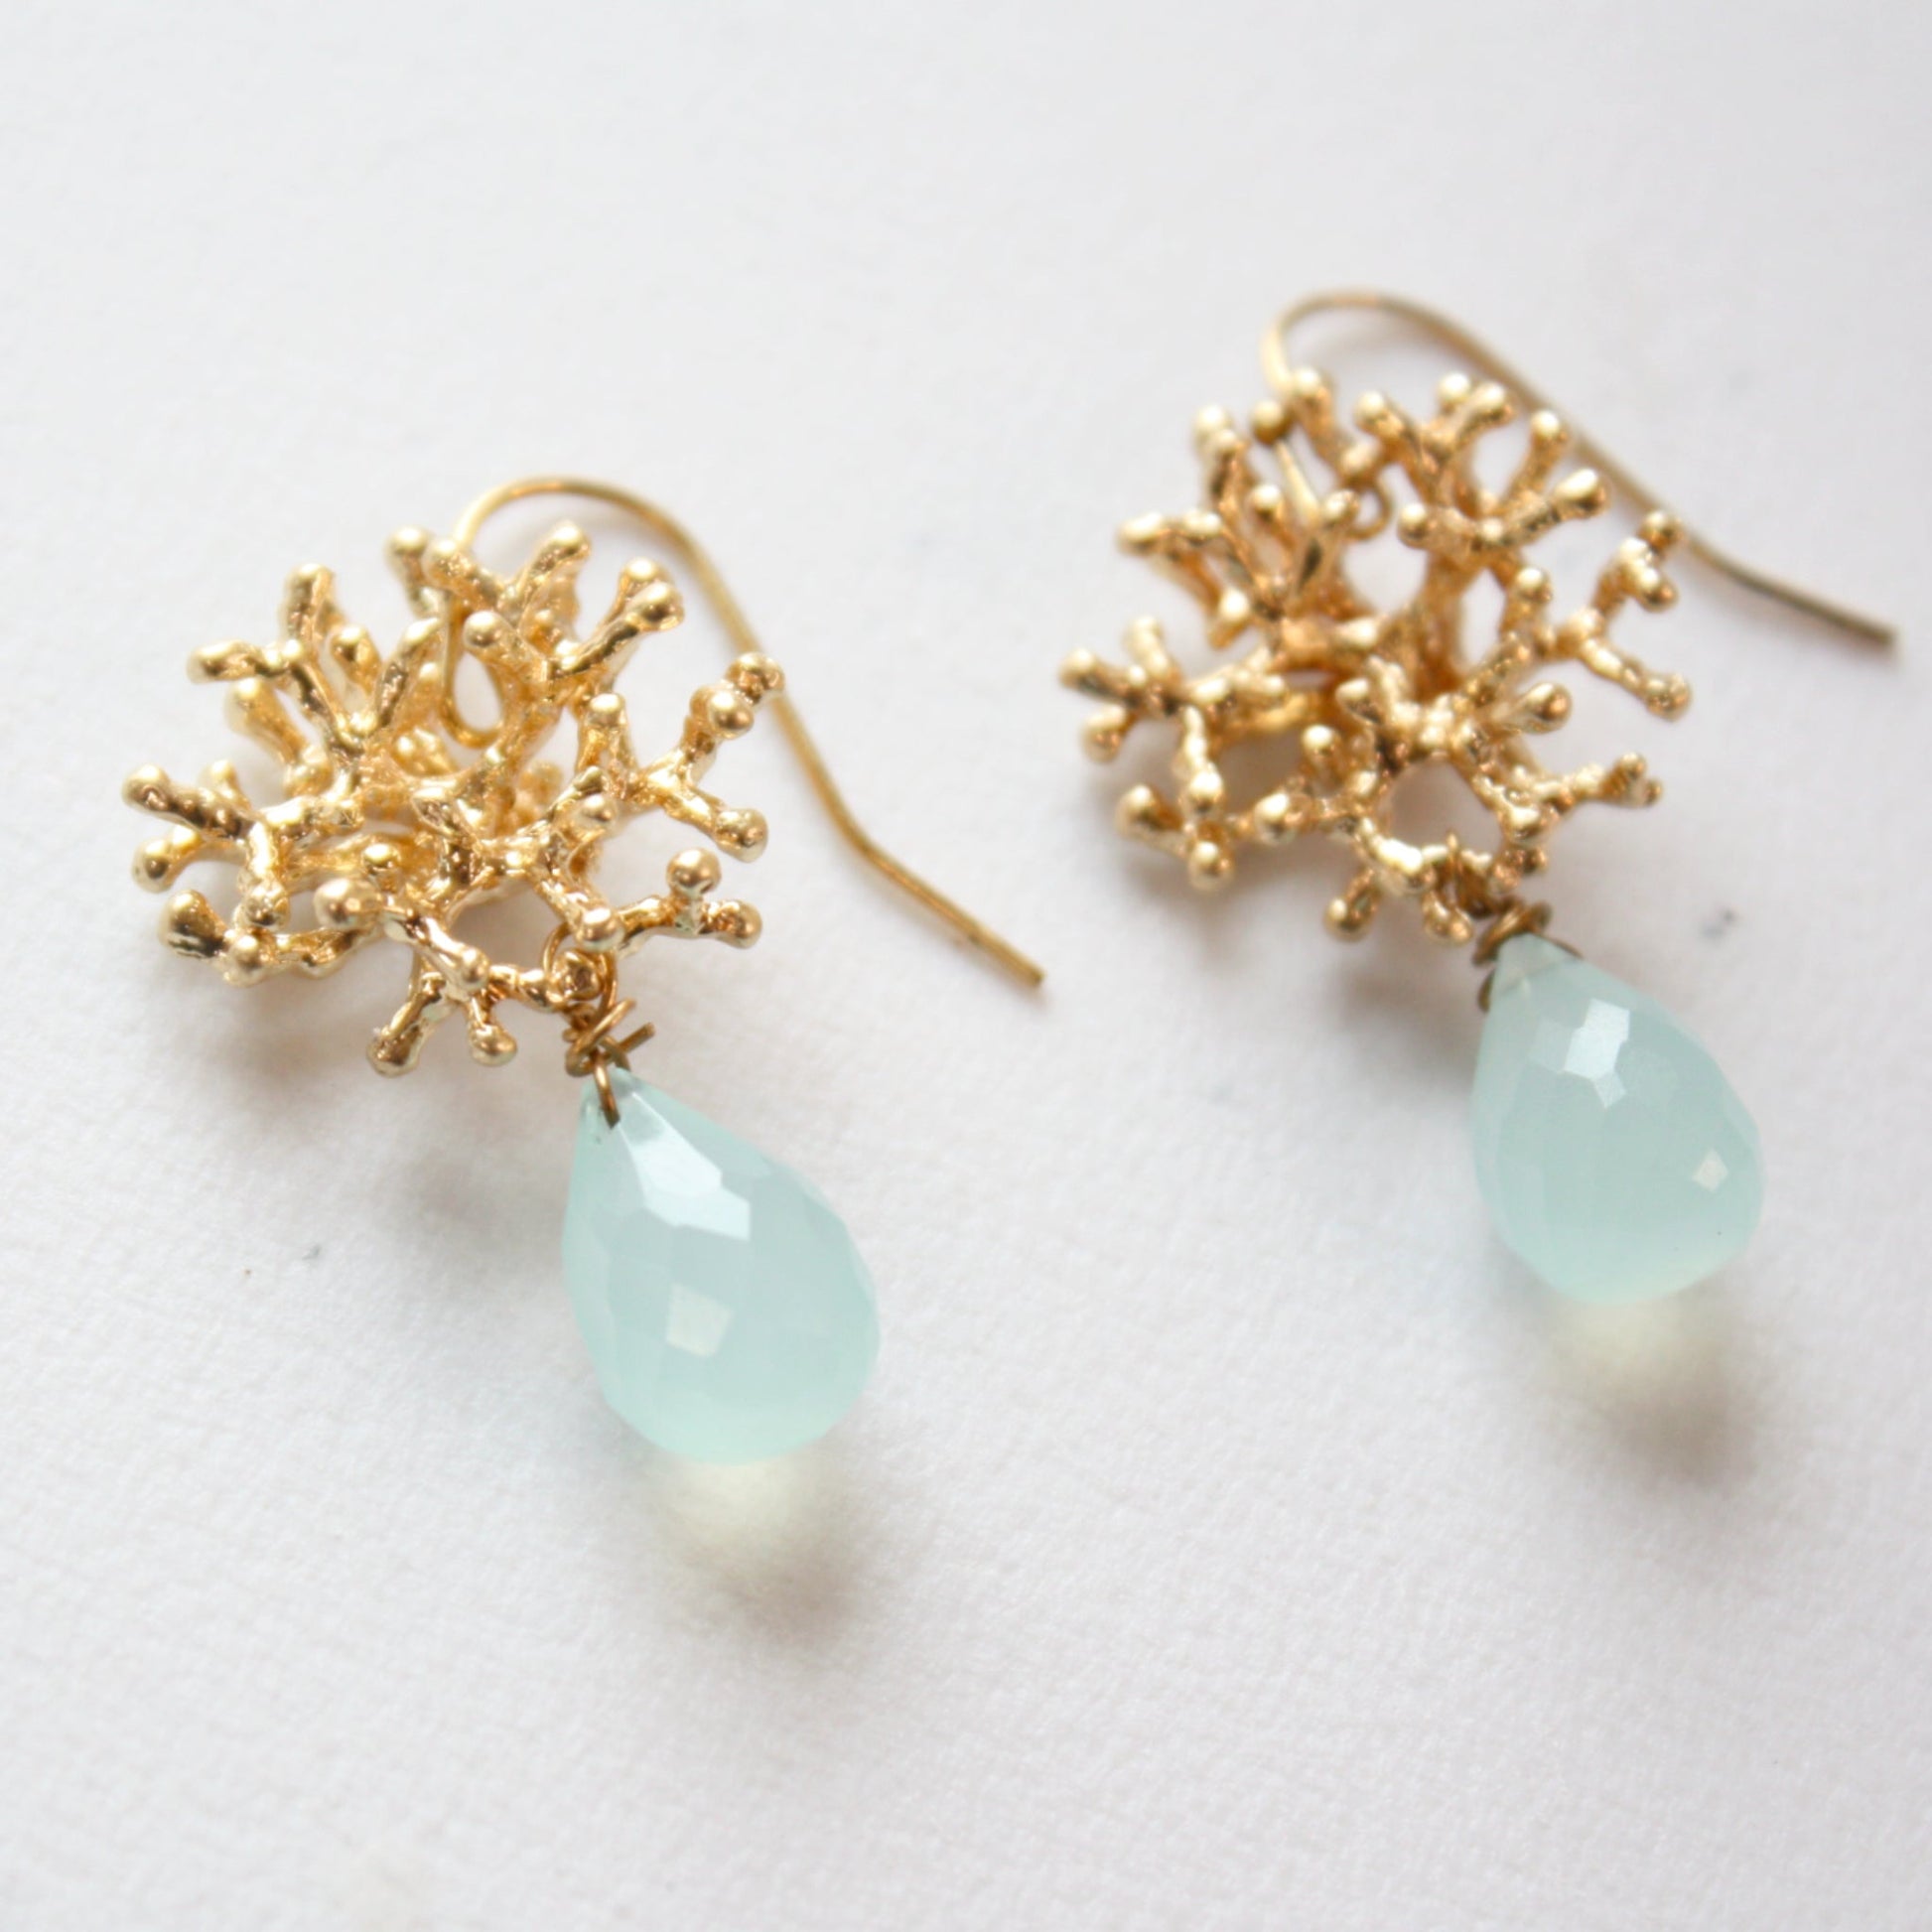 Gemstone Gold Coral Boho Dangle Earrings - Made in the USA